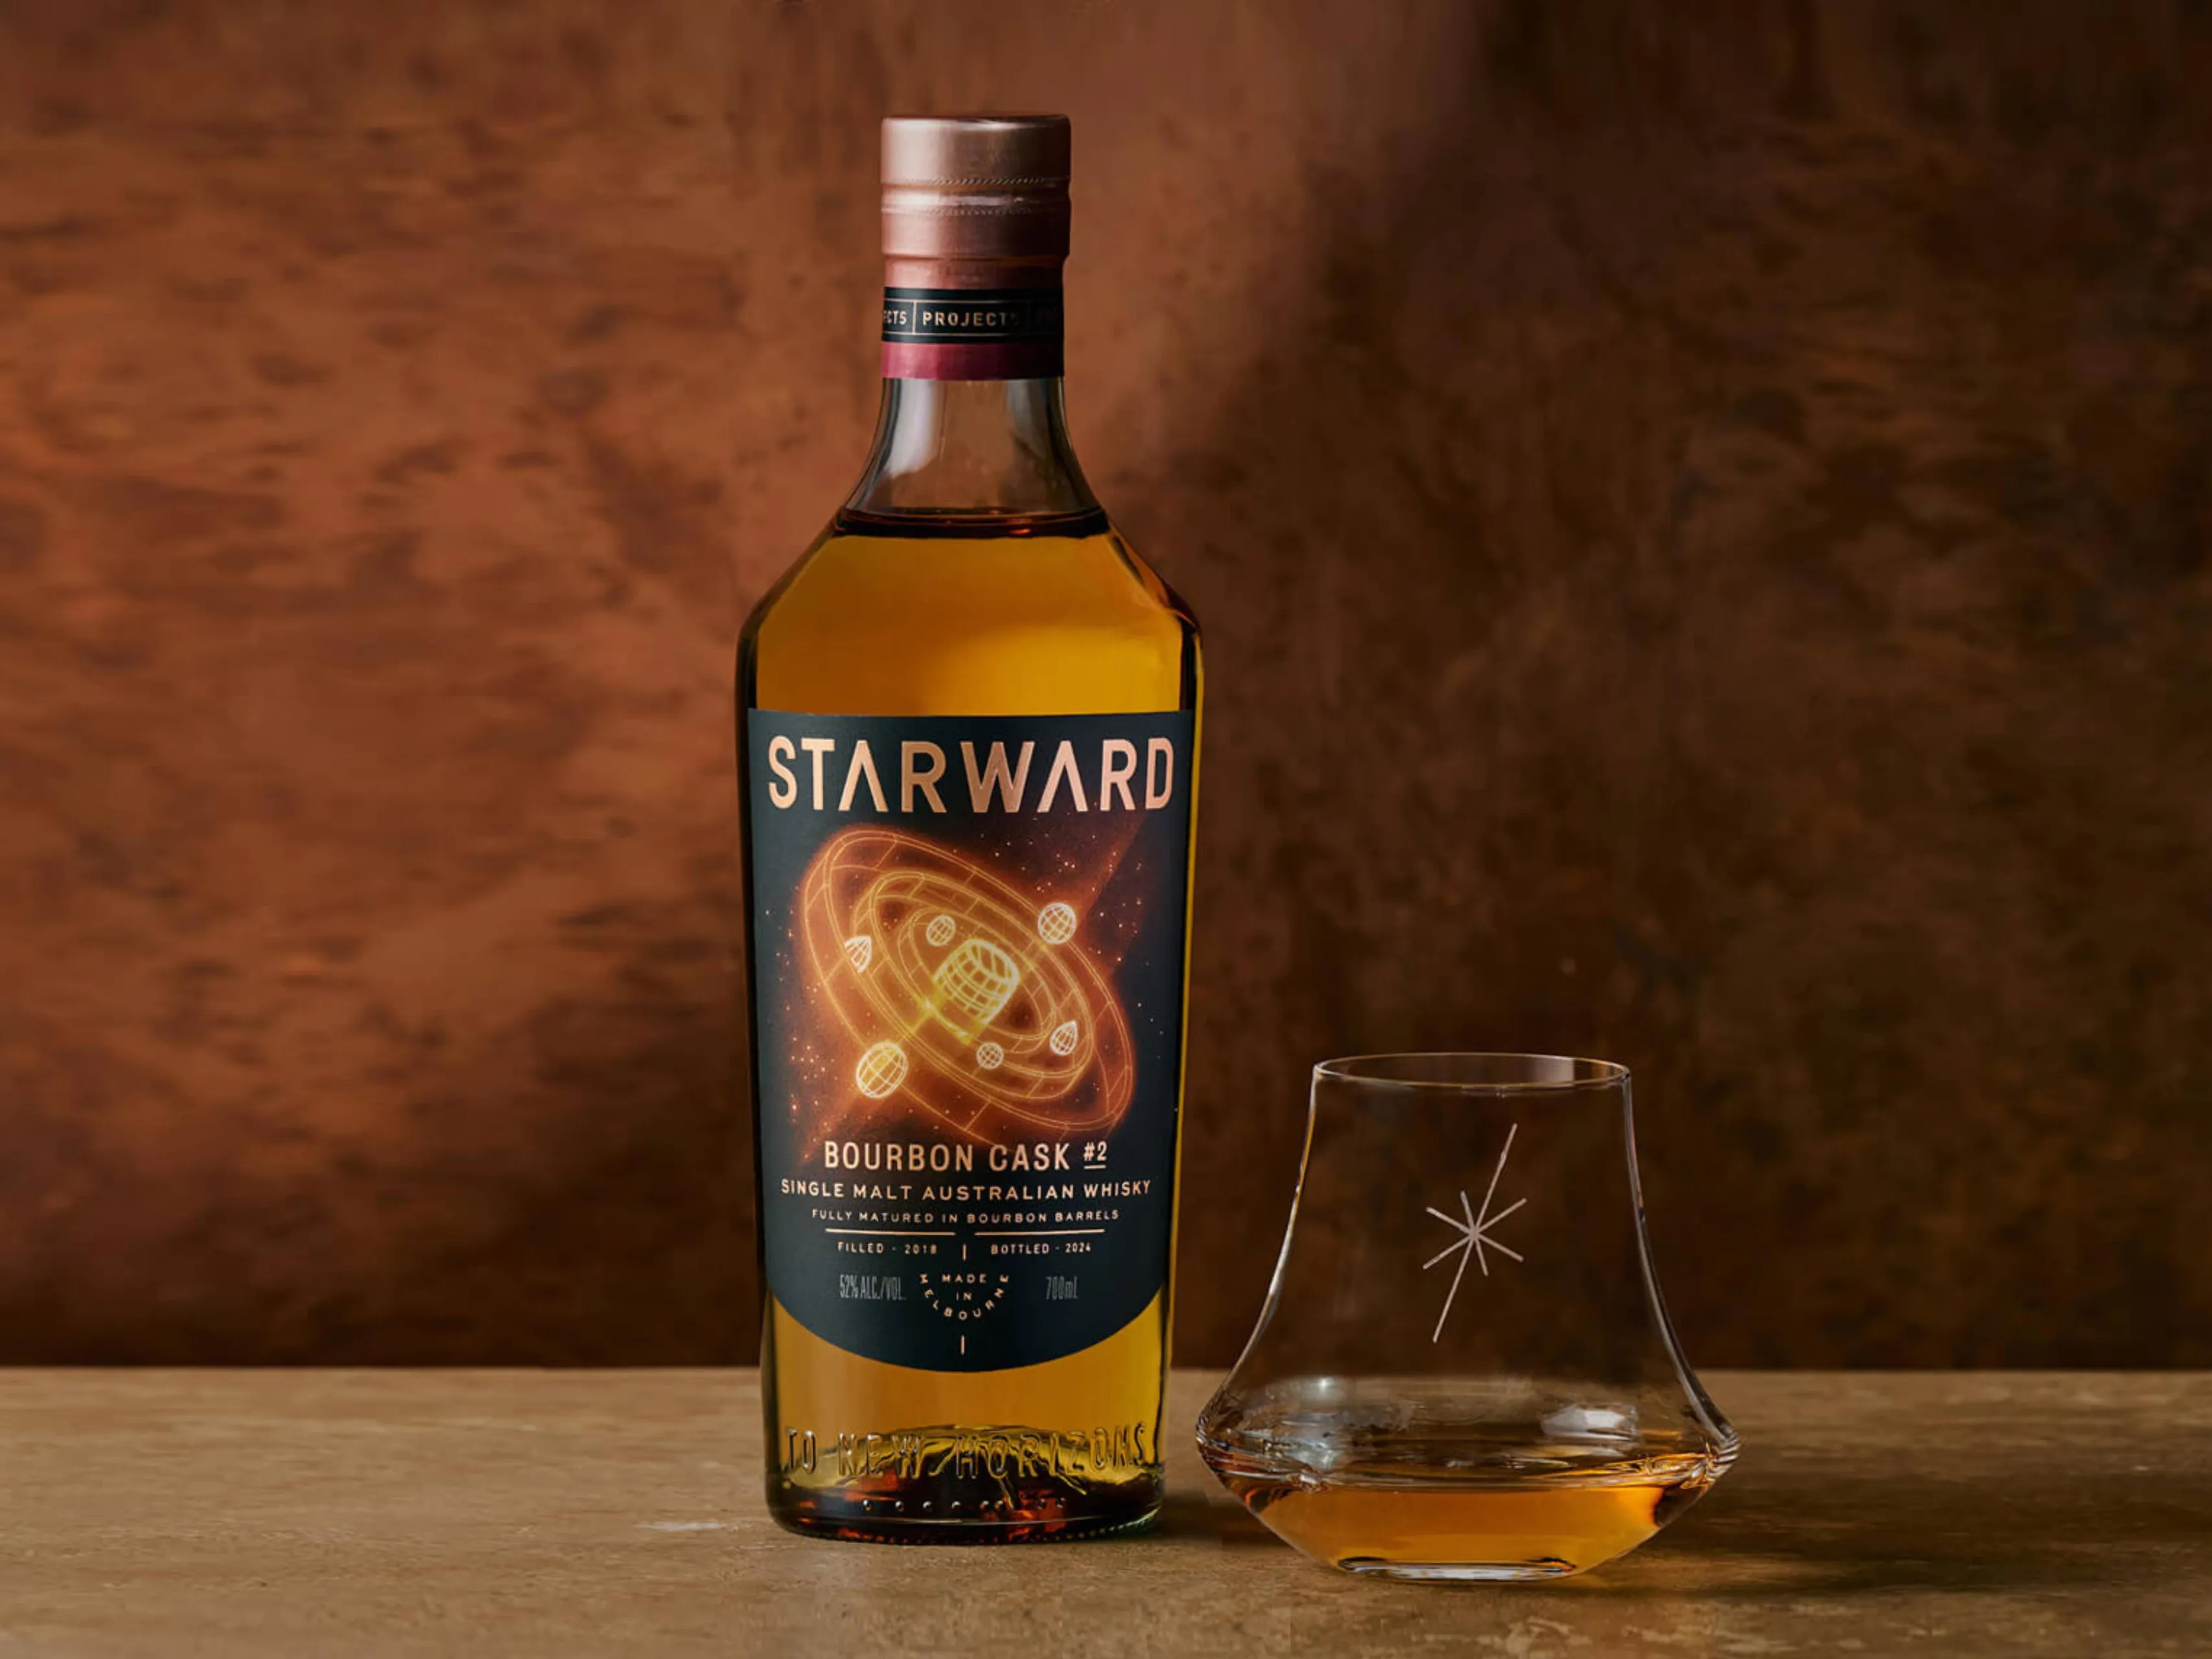 starward bourbon cask 2 single malt whisky